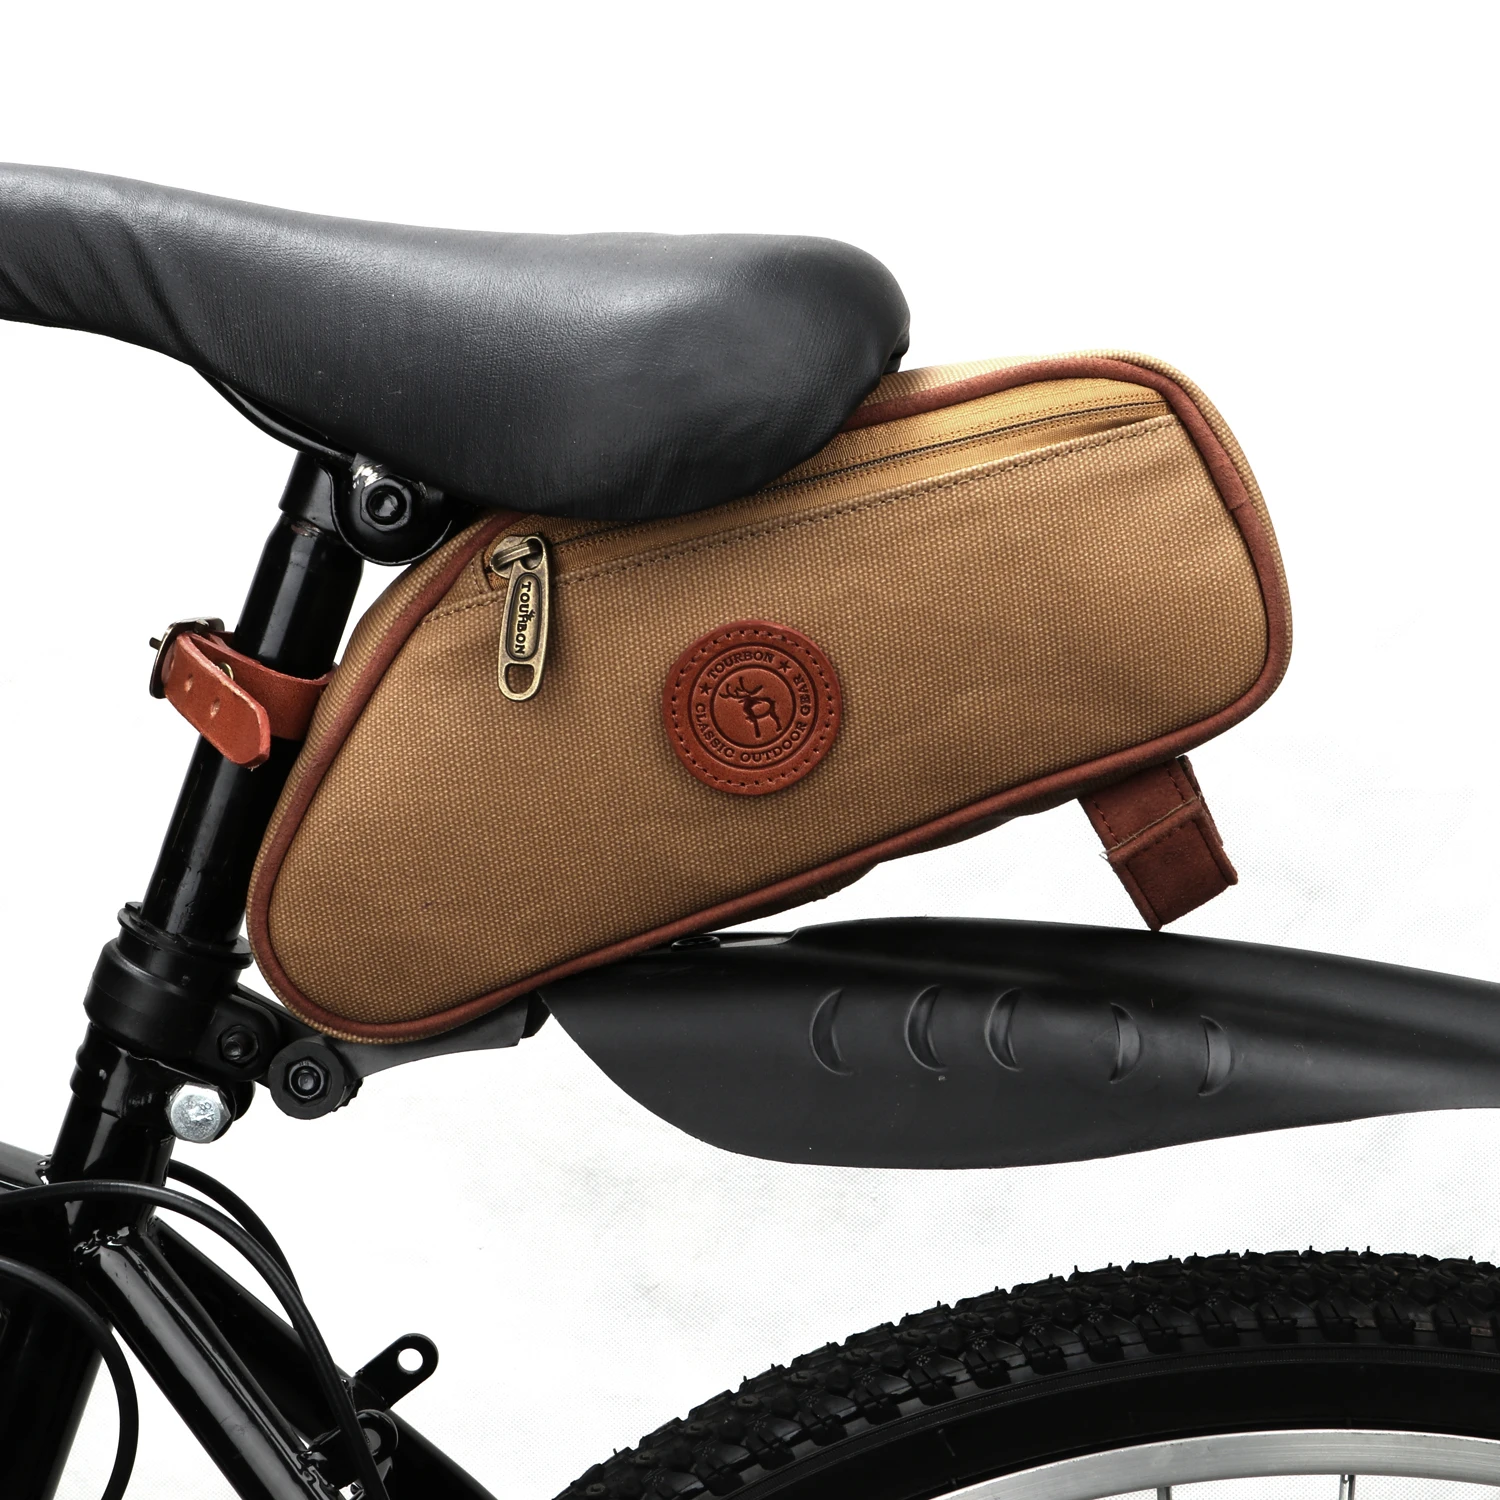 Tourbon 自転車フレームチューブバッグ,サドルバッグ,シートバッグ,リアキャリア,ブラウン,ワックスキャンバス,防水サイクリングアクセサリー|tube  bag|bag bicyclebag bicycle accessories - AliExpress